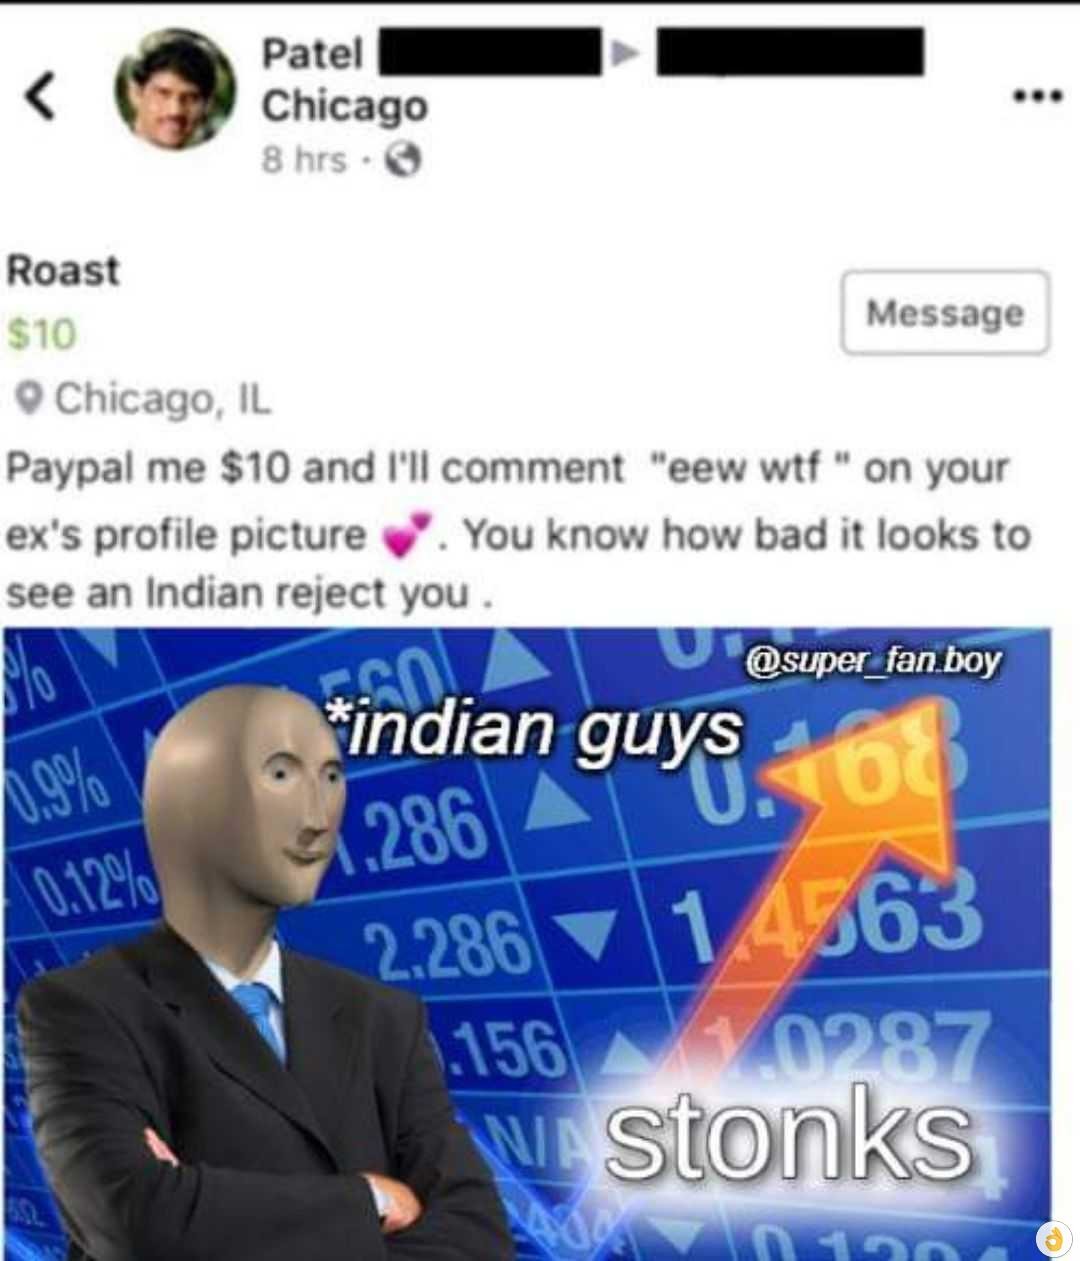 Indian guys: STONKS - meme